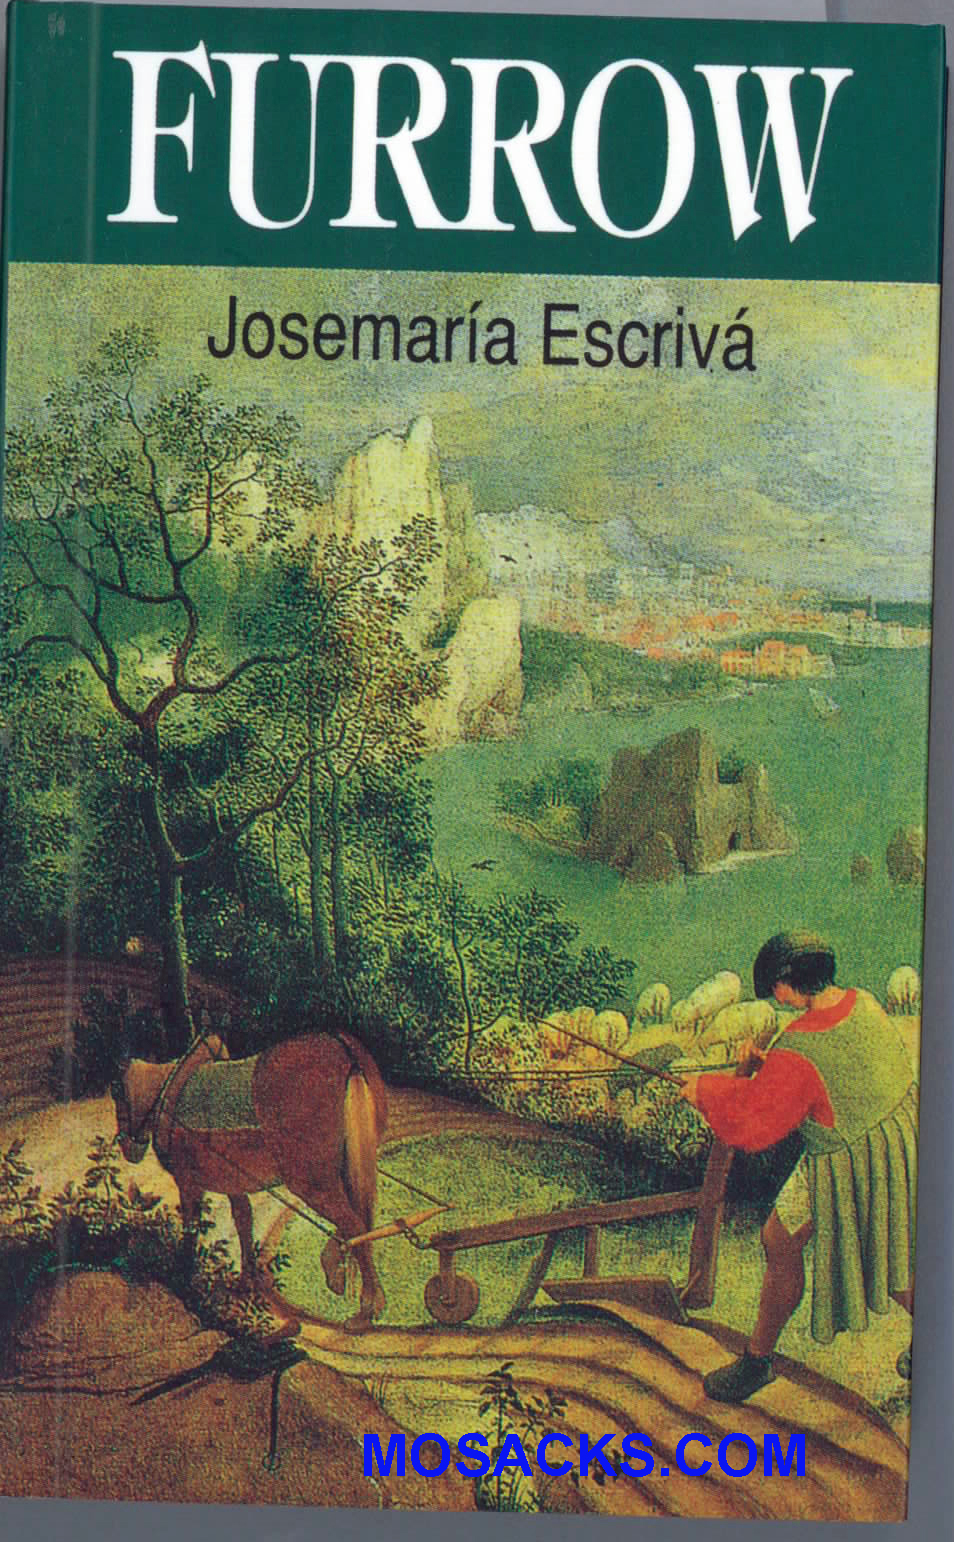 Furrow by Josemaria Escriva 445-40333